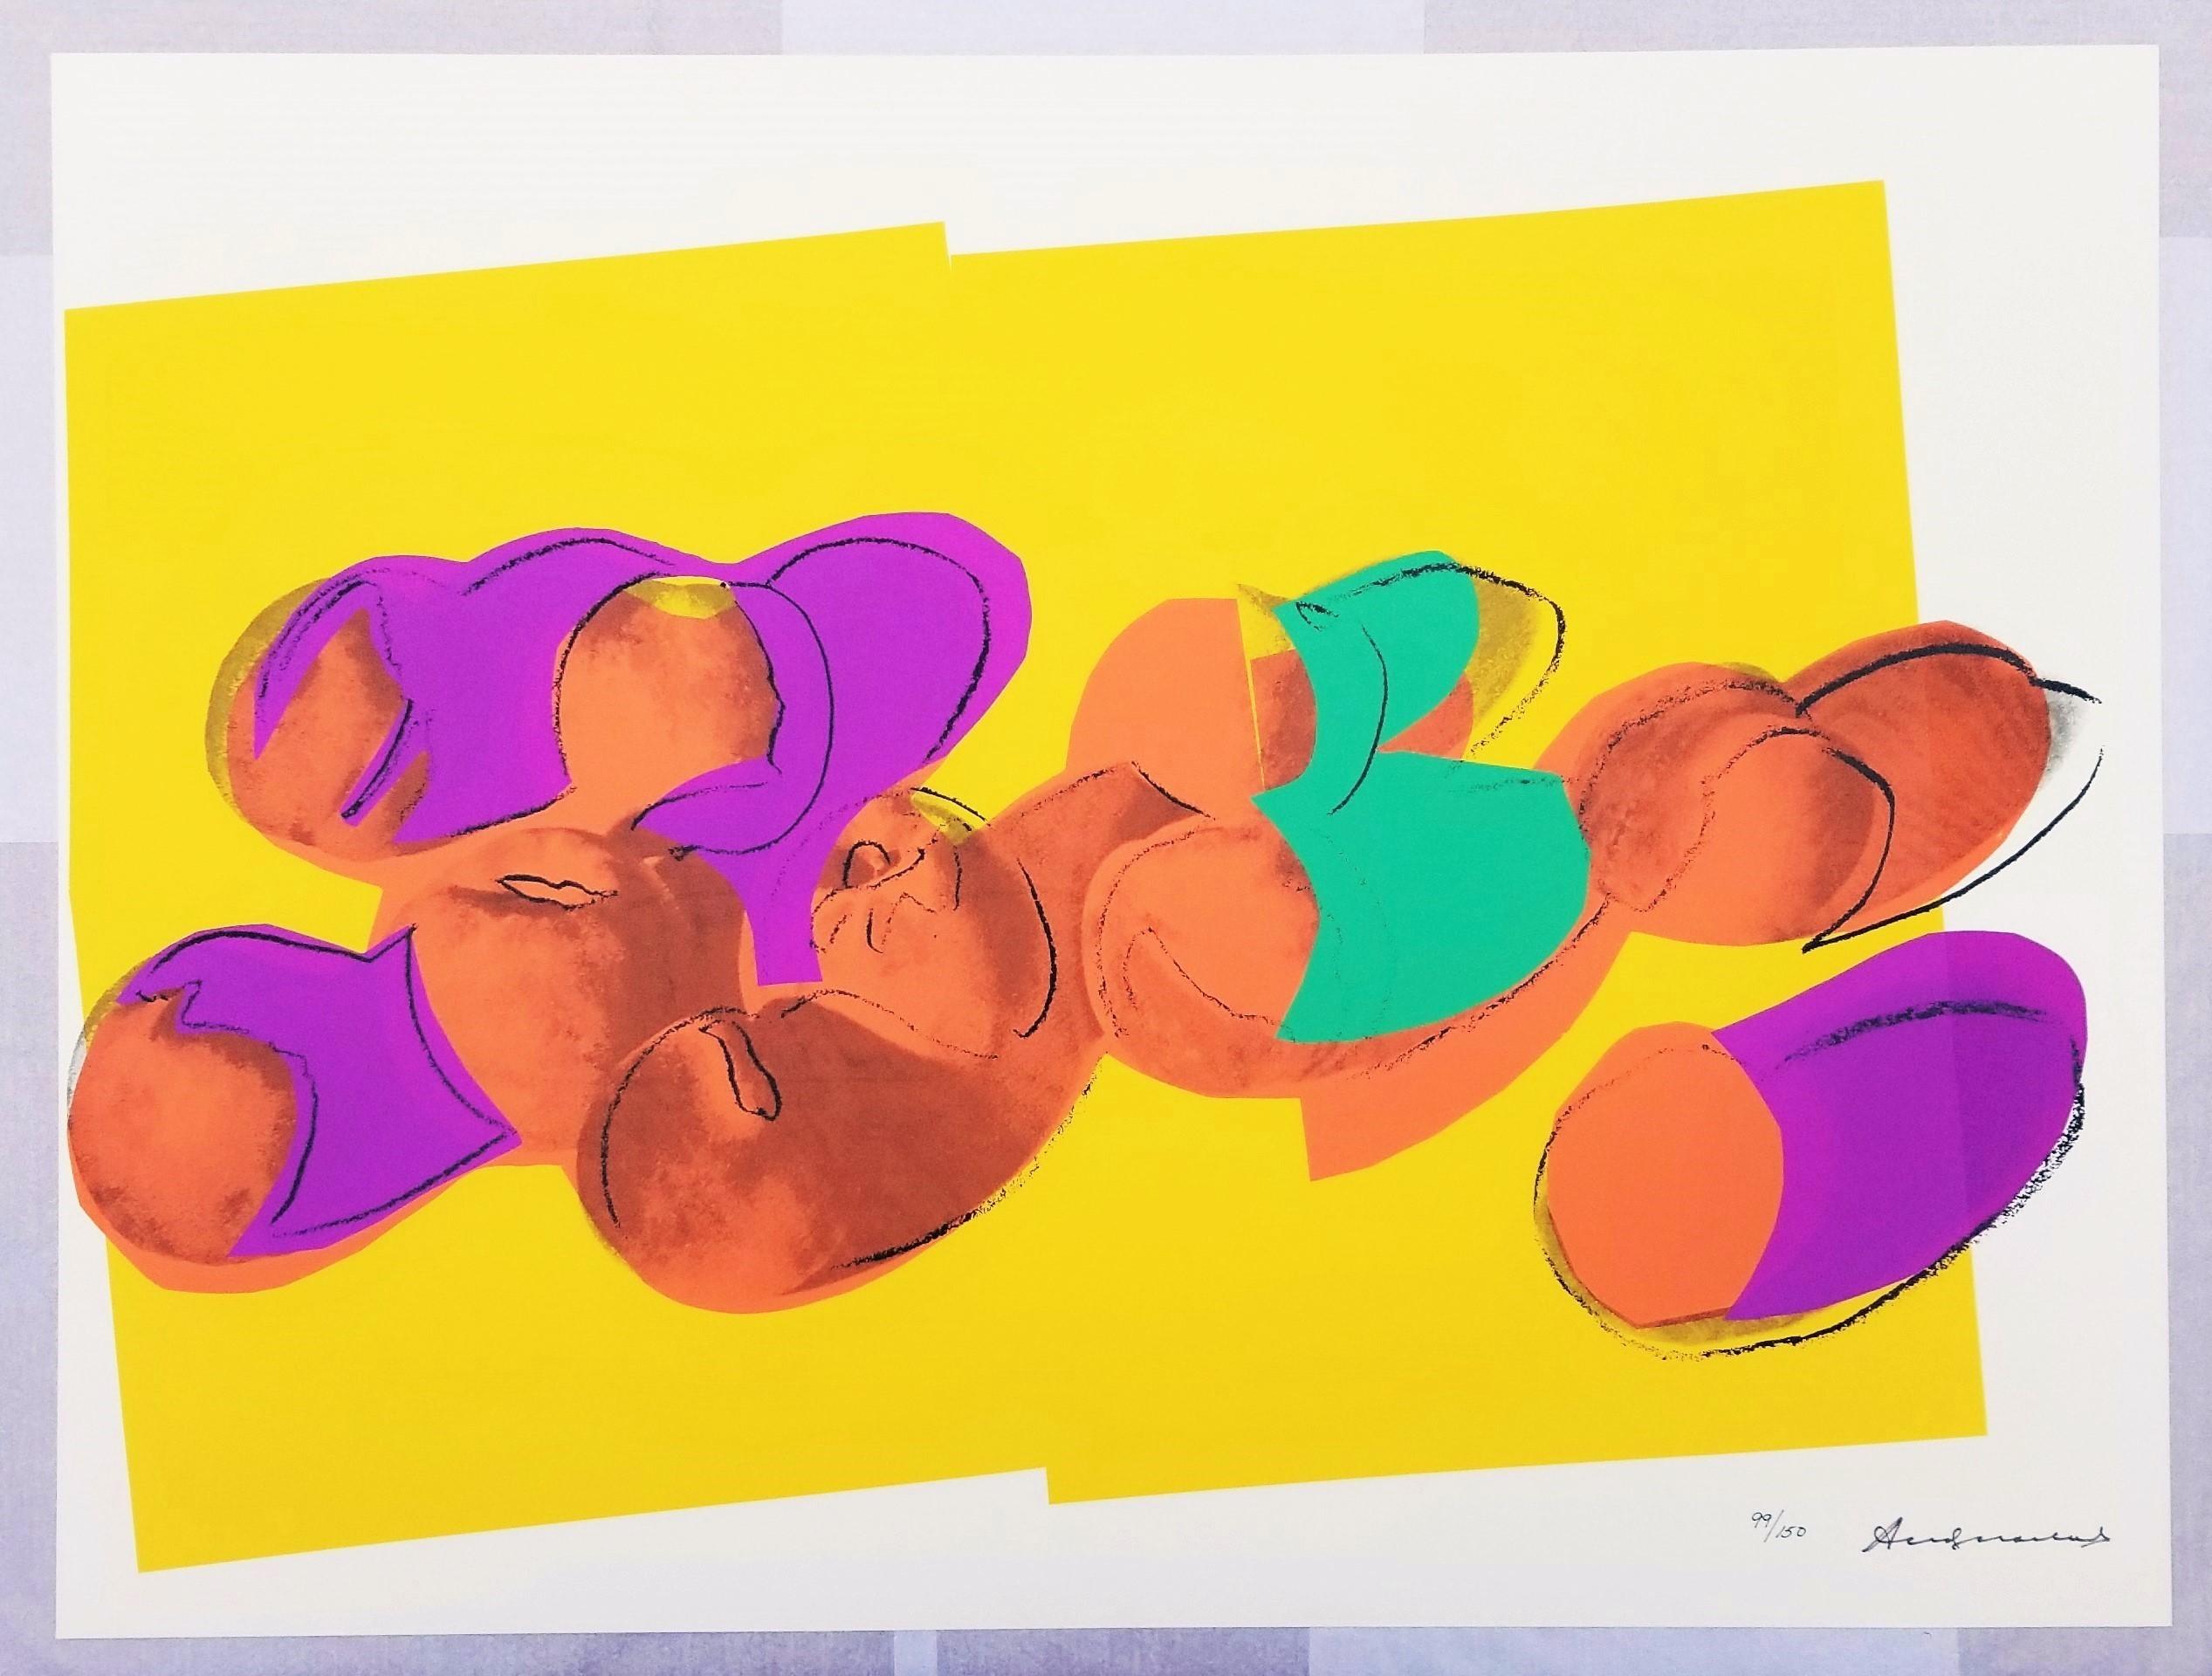 Artist: Andy Warhol (American, 1928-1987)
Title: 